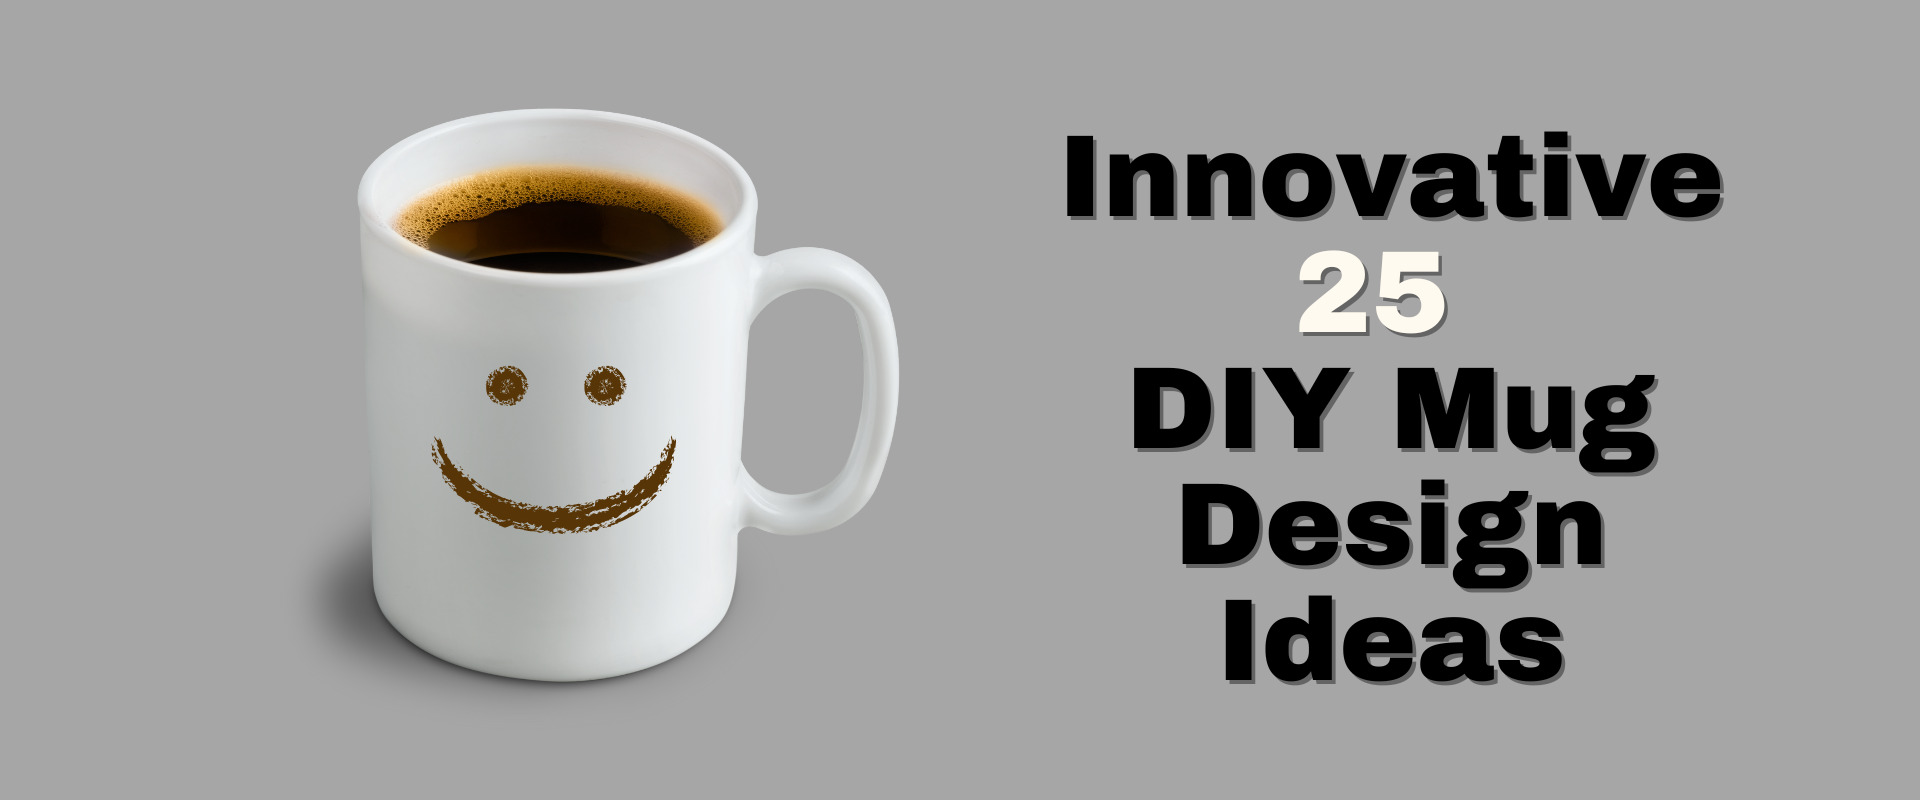 25 Innovative DIY Mug Design Ideas